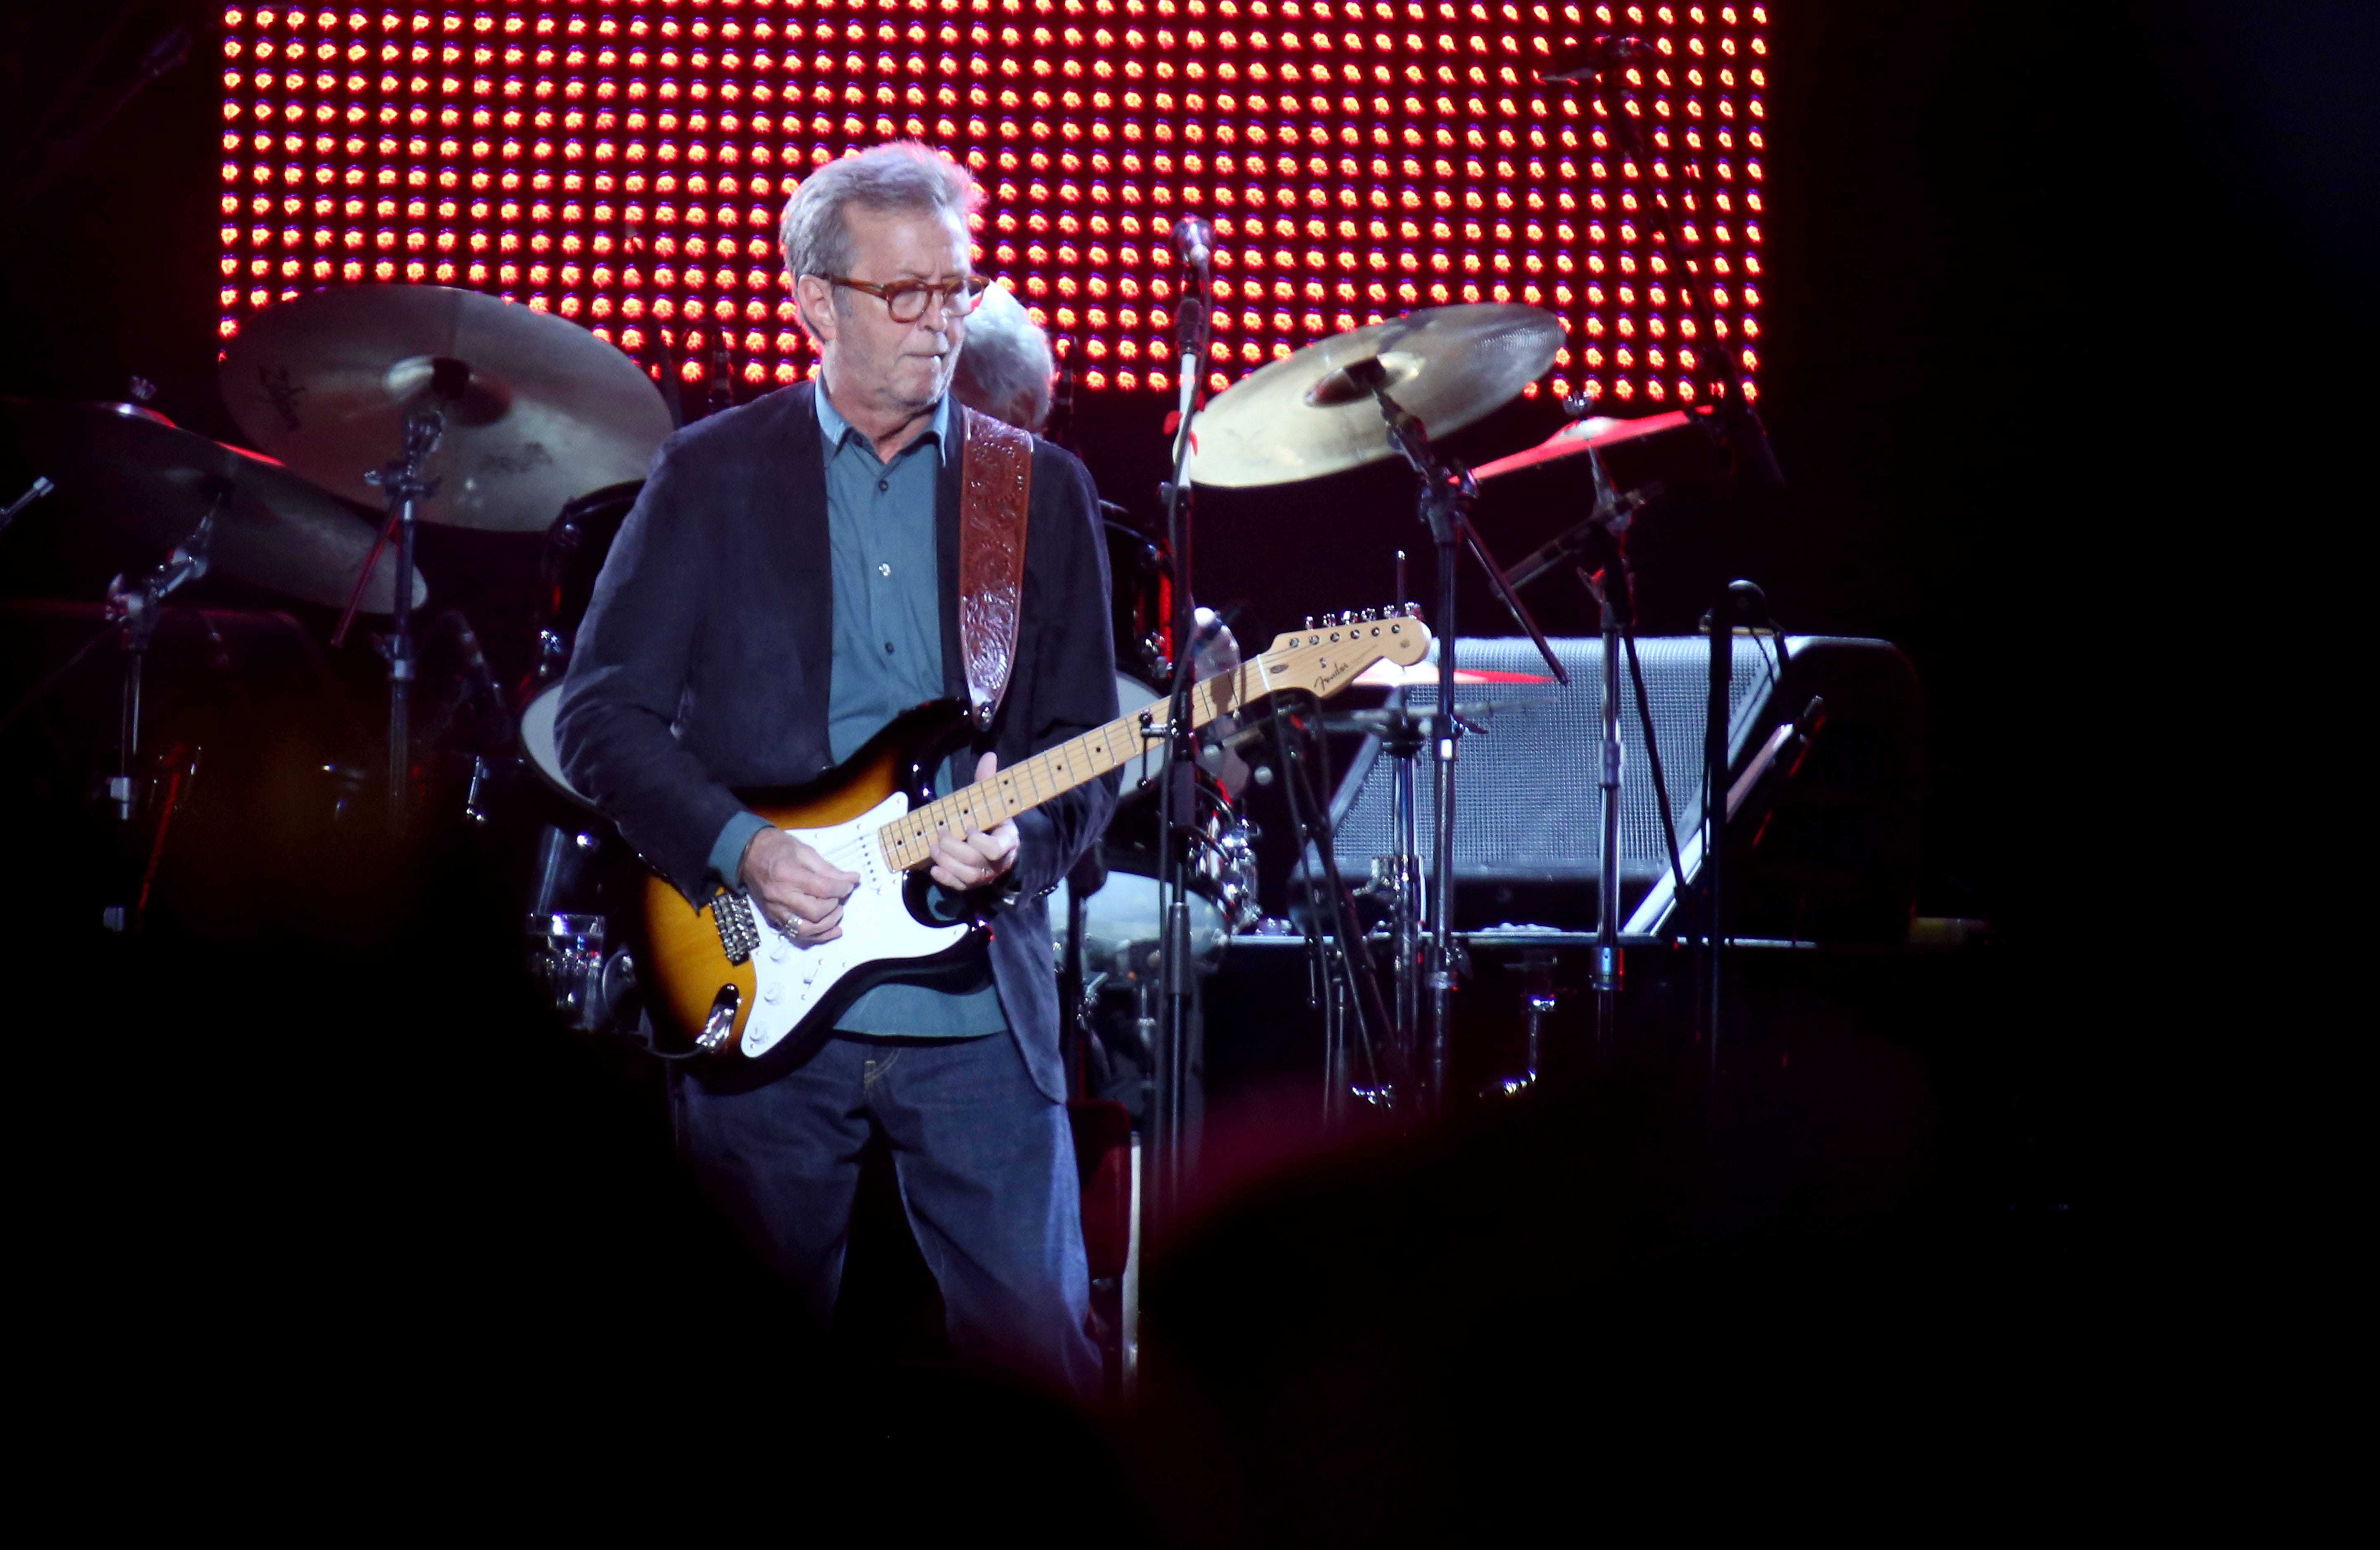 Eric Clapton & John Mayer 70th Birthday Celebration: Pretending 